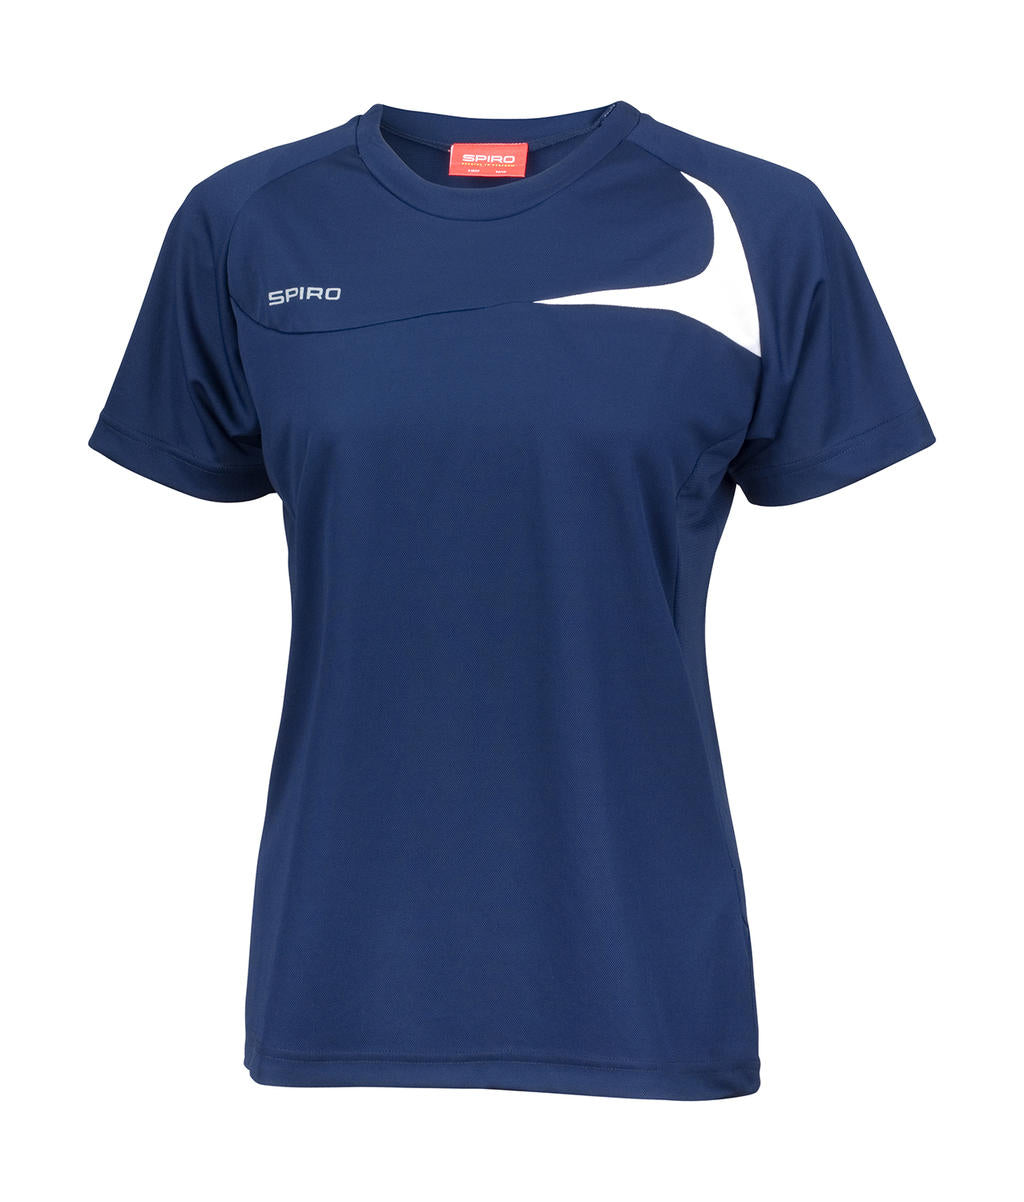 Result Spiro Damen Dash Training Sport Fitness Shirt